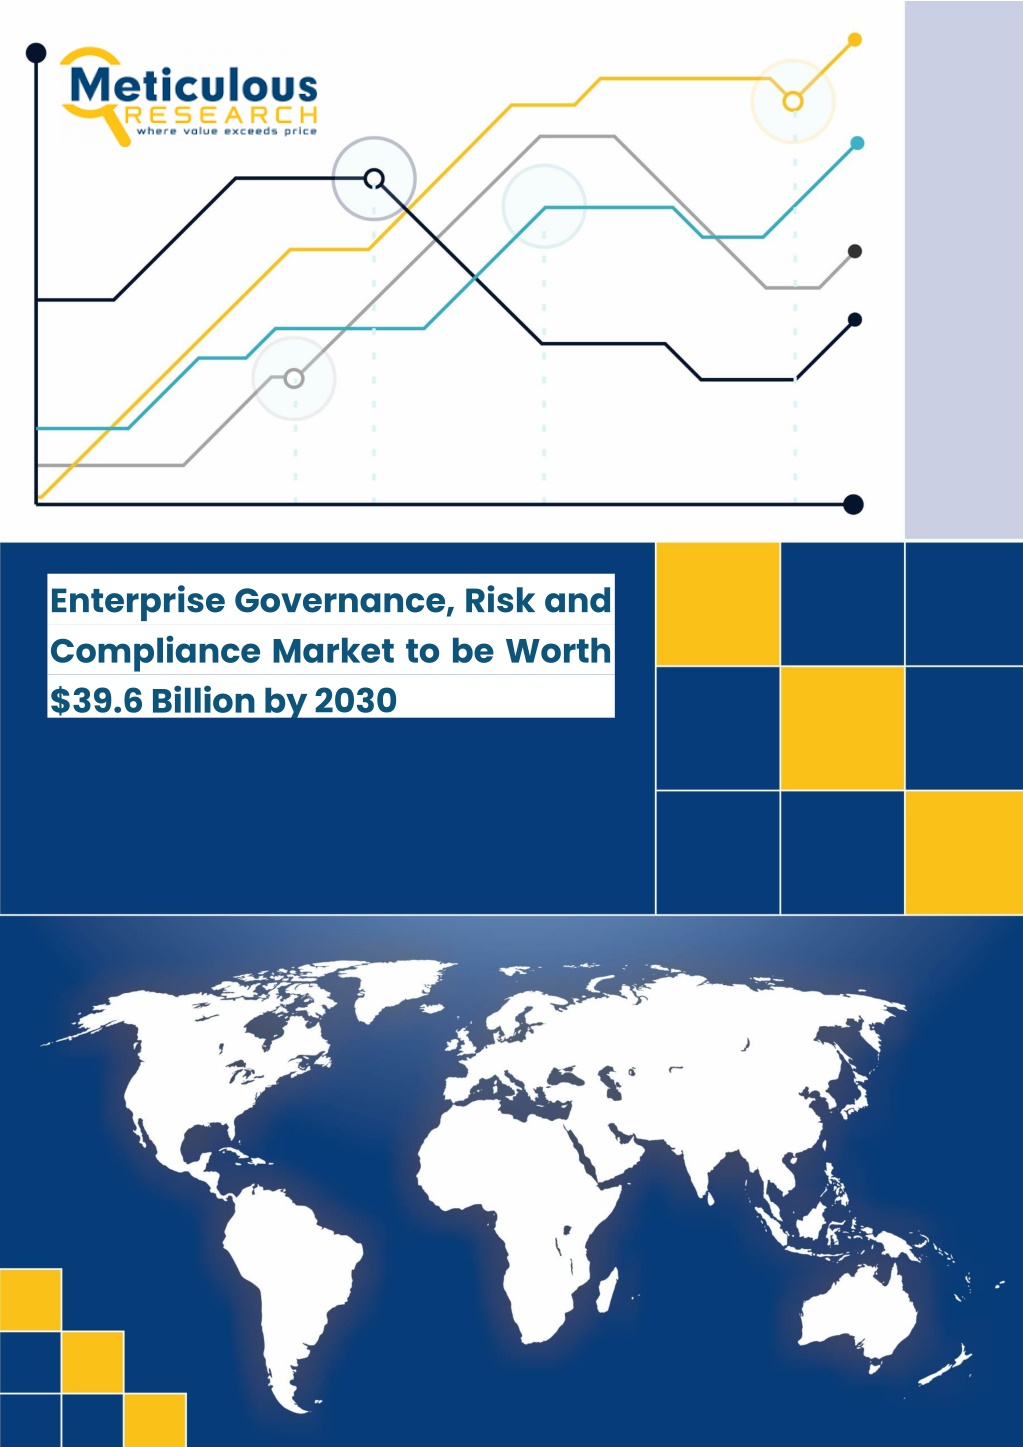 enterprise governance risk and compliance market l.w